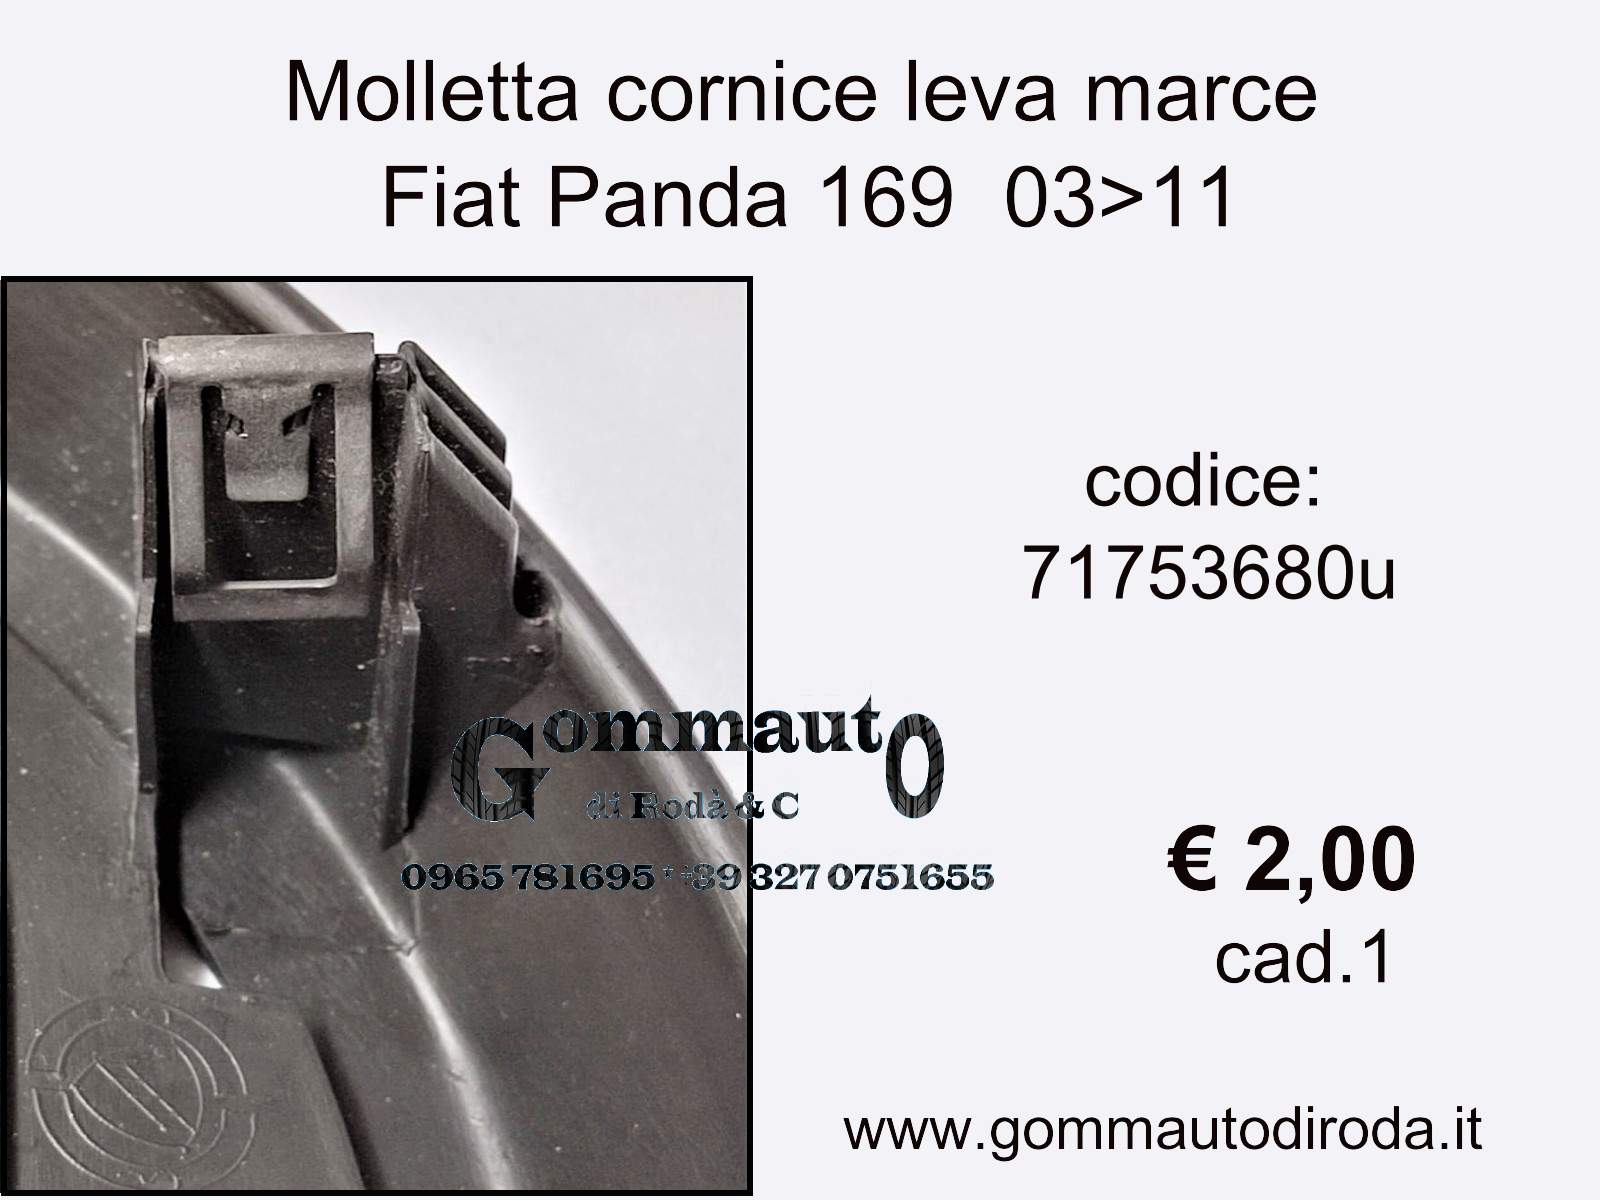 https://www.gommautodiroda.it/wp-content/uploads/2022/08/Fiat-Panda-169-03-11-Mollette-cornice-mostrina-cuffia-leva-marce-71753680-735322929-_.jpg